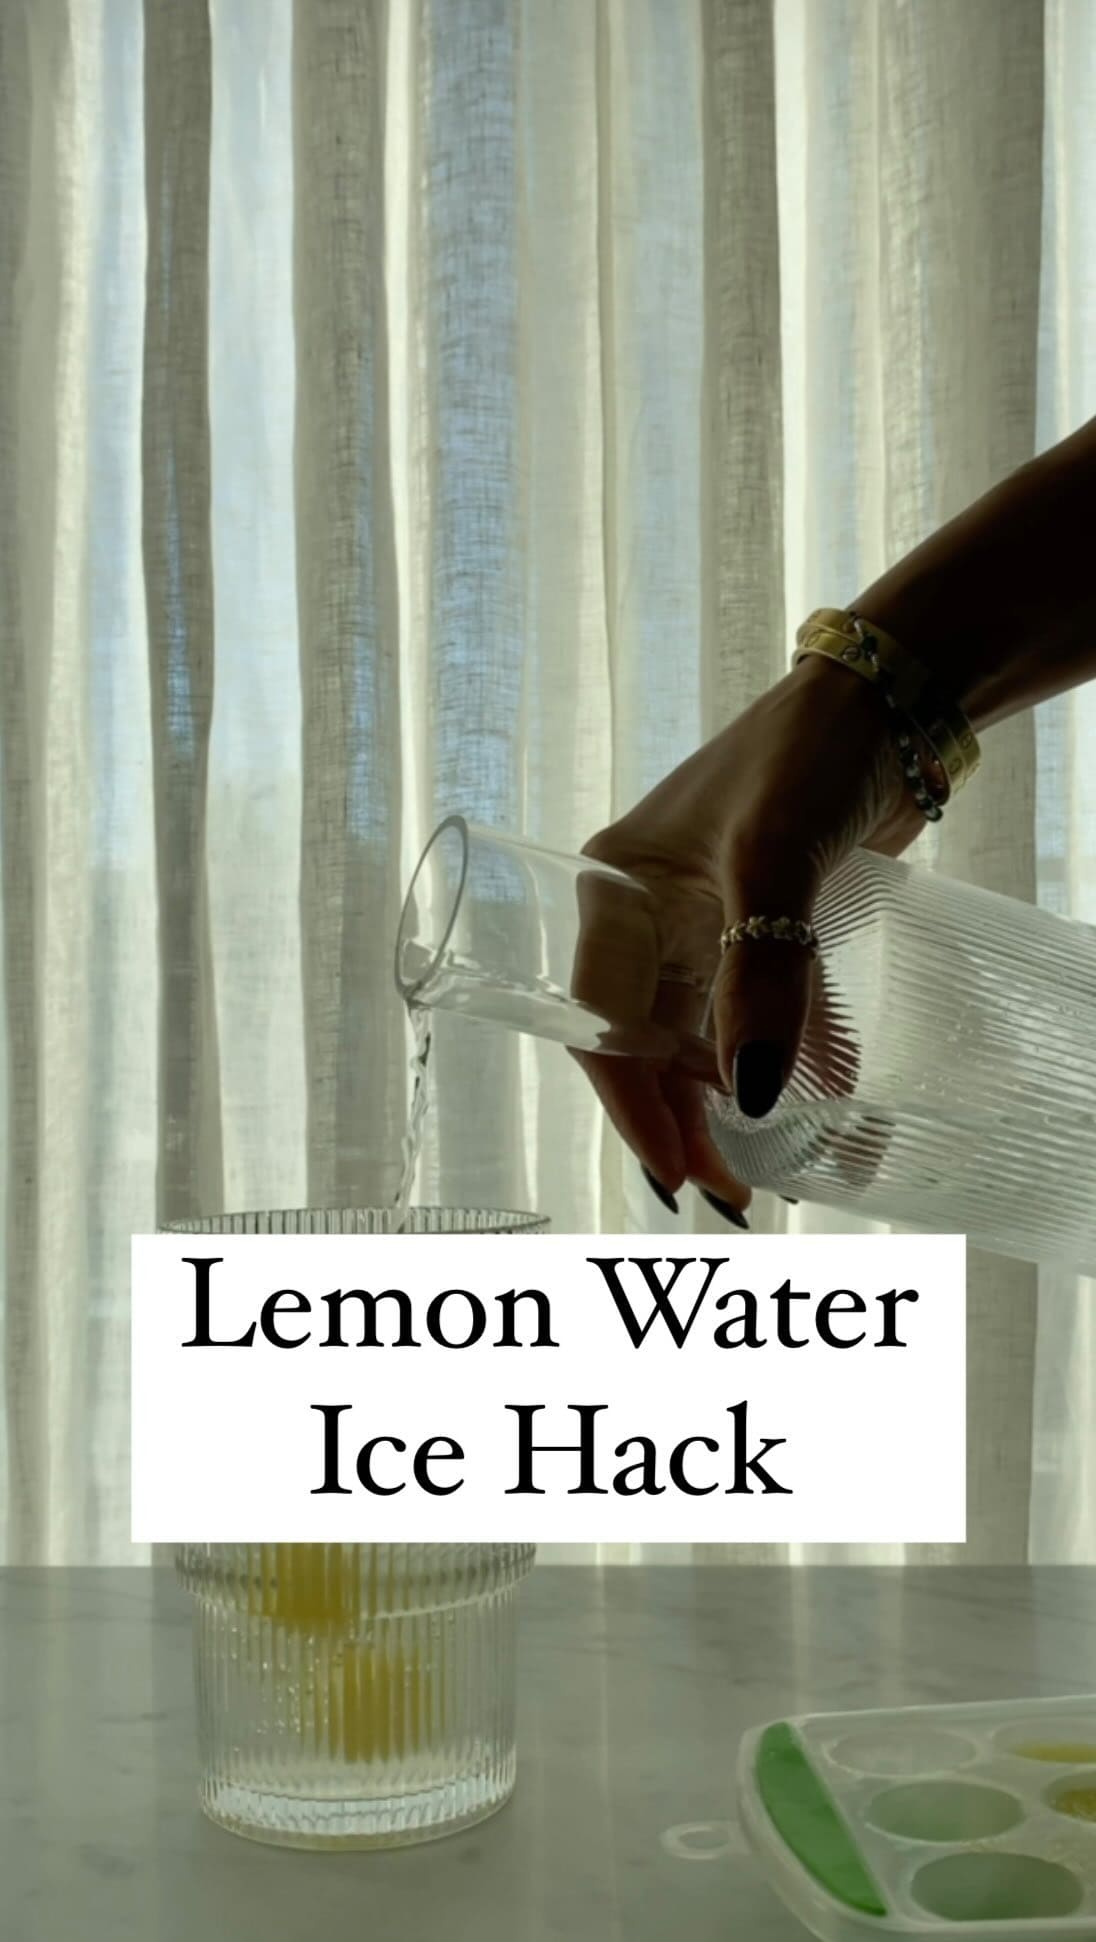 Lemon water all summer long 

#reels #healthyrecipes #healthhacks #lemonwater